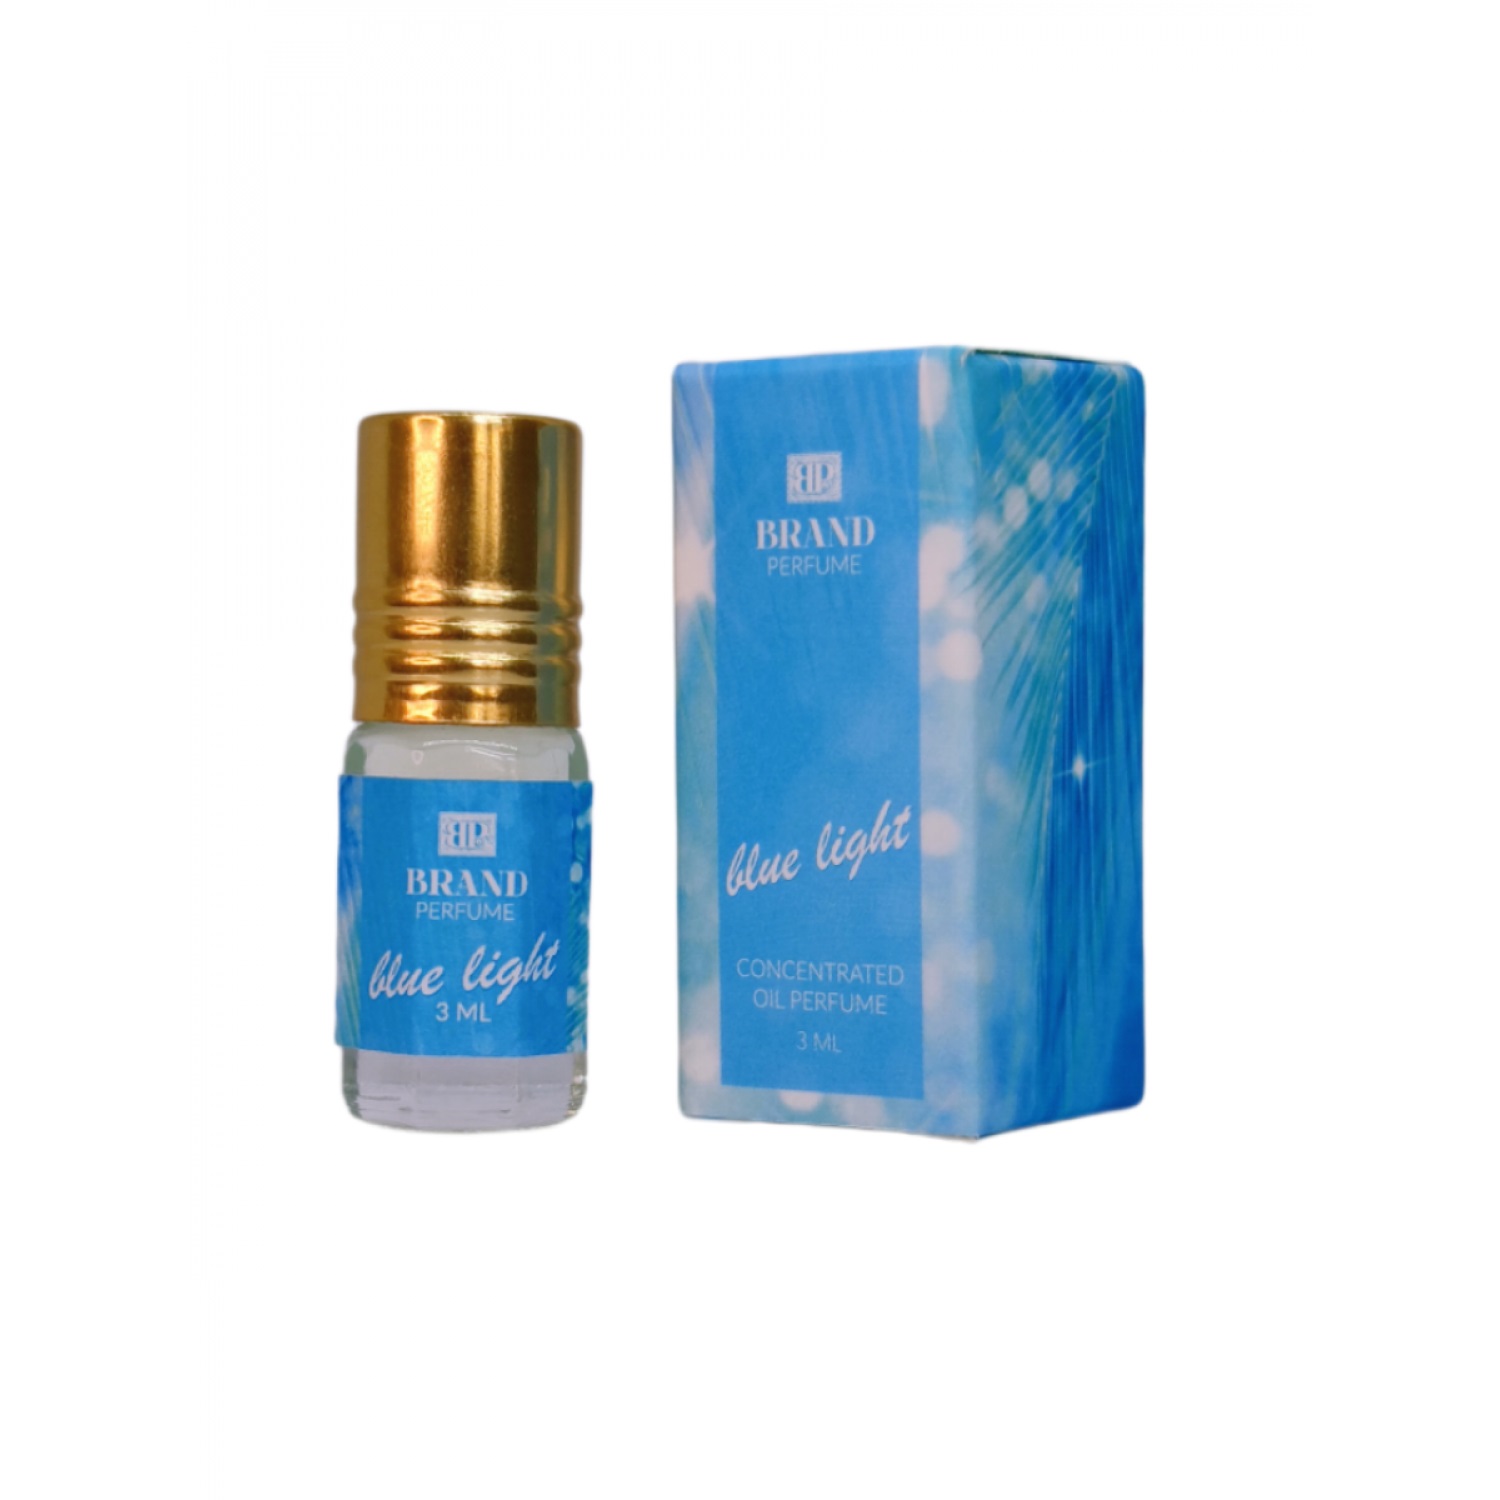 BLUE LIGHT Concentrated Oil Perfume, Brand Perfume (БЛЮ ЛАЙТ Концентрированные масляные духи), ролик, 3 мл.